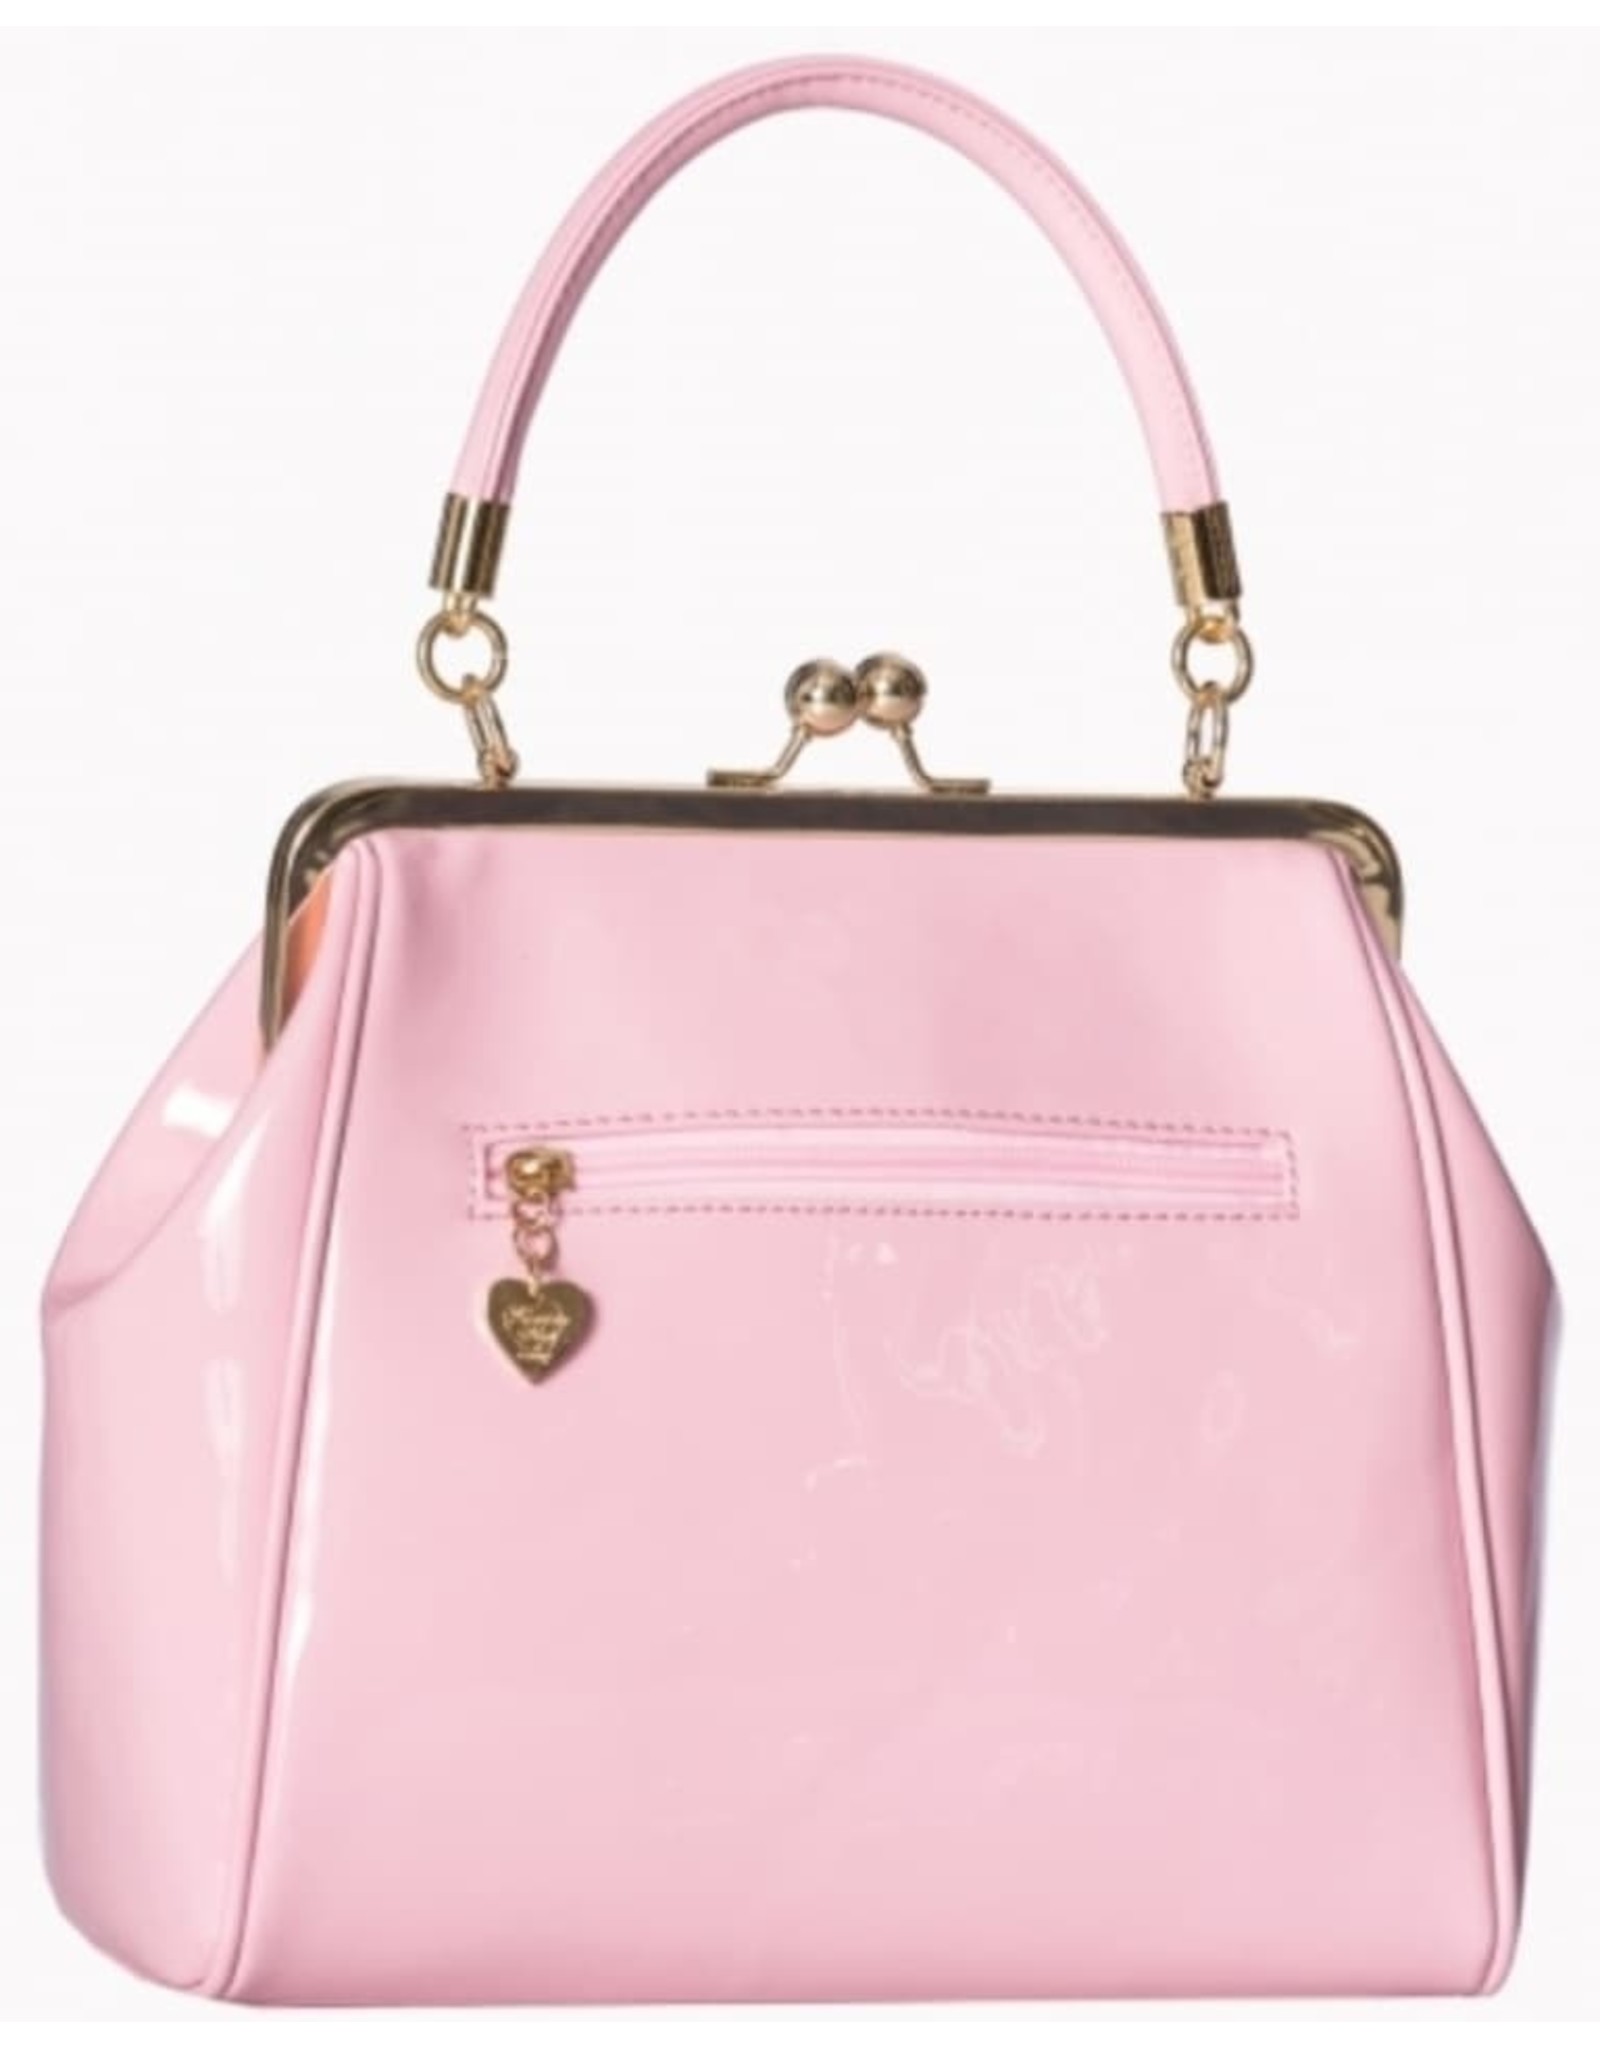 Banned Vintage bags Retro bags - Banned handbag American Vintage (pink)